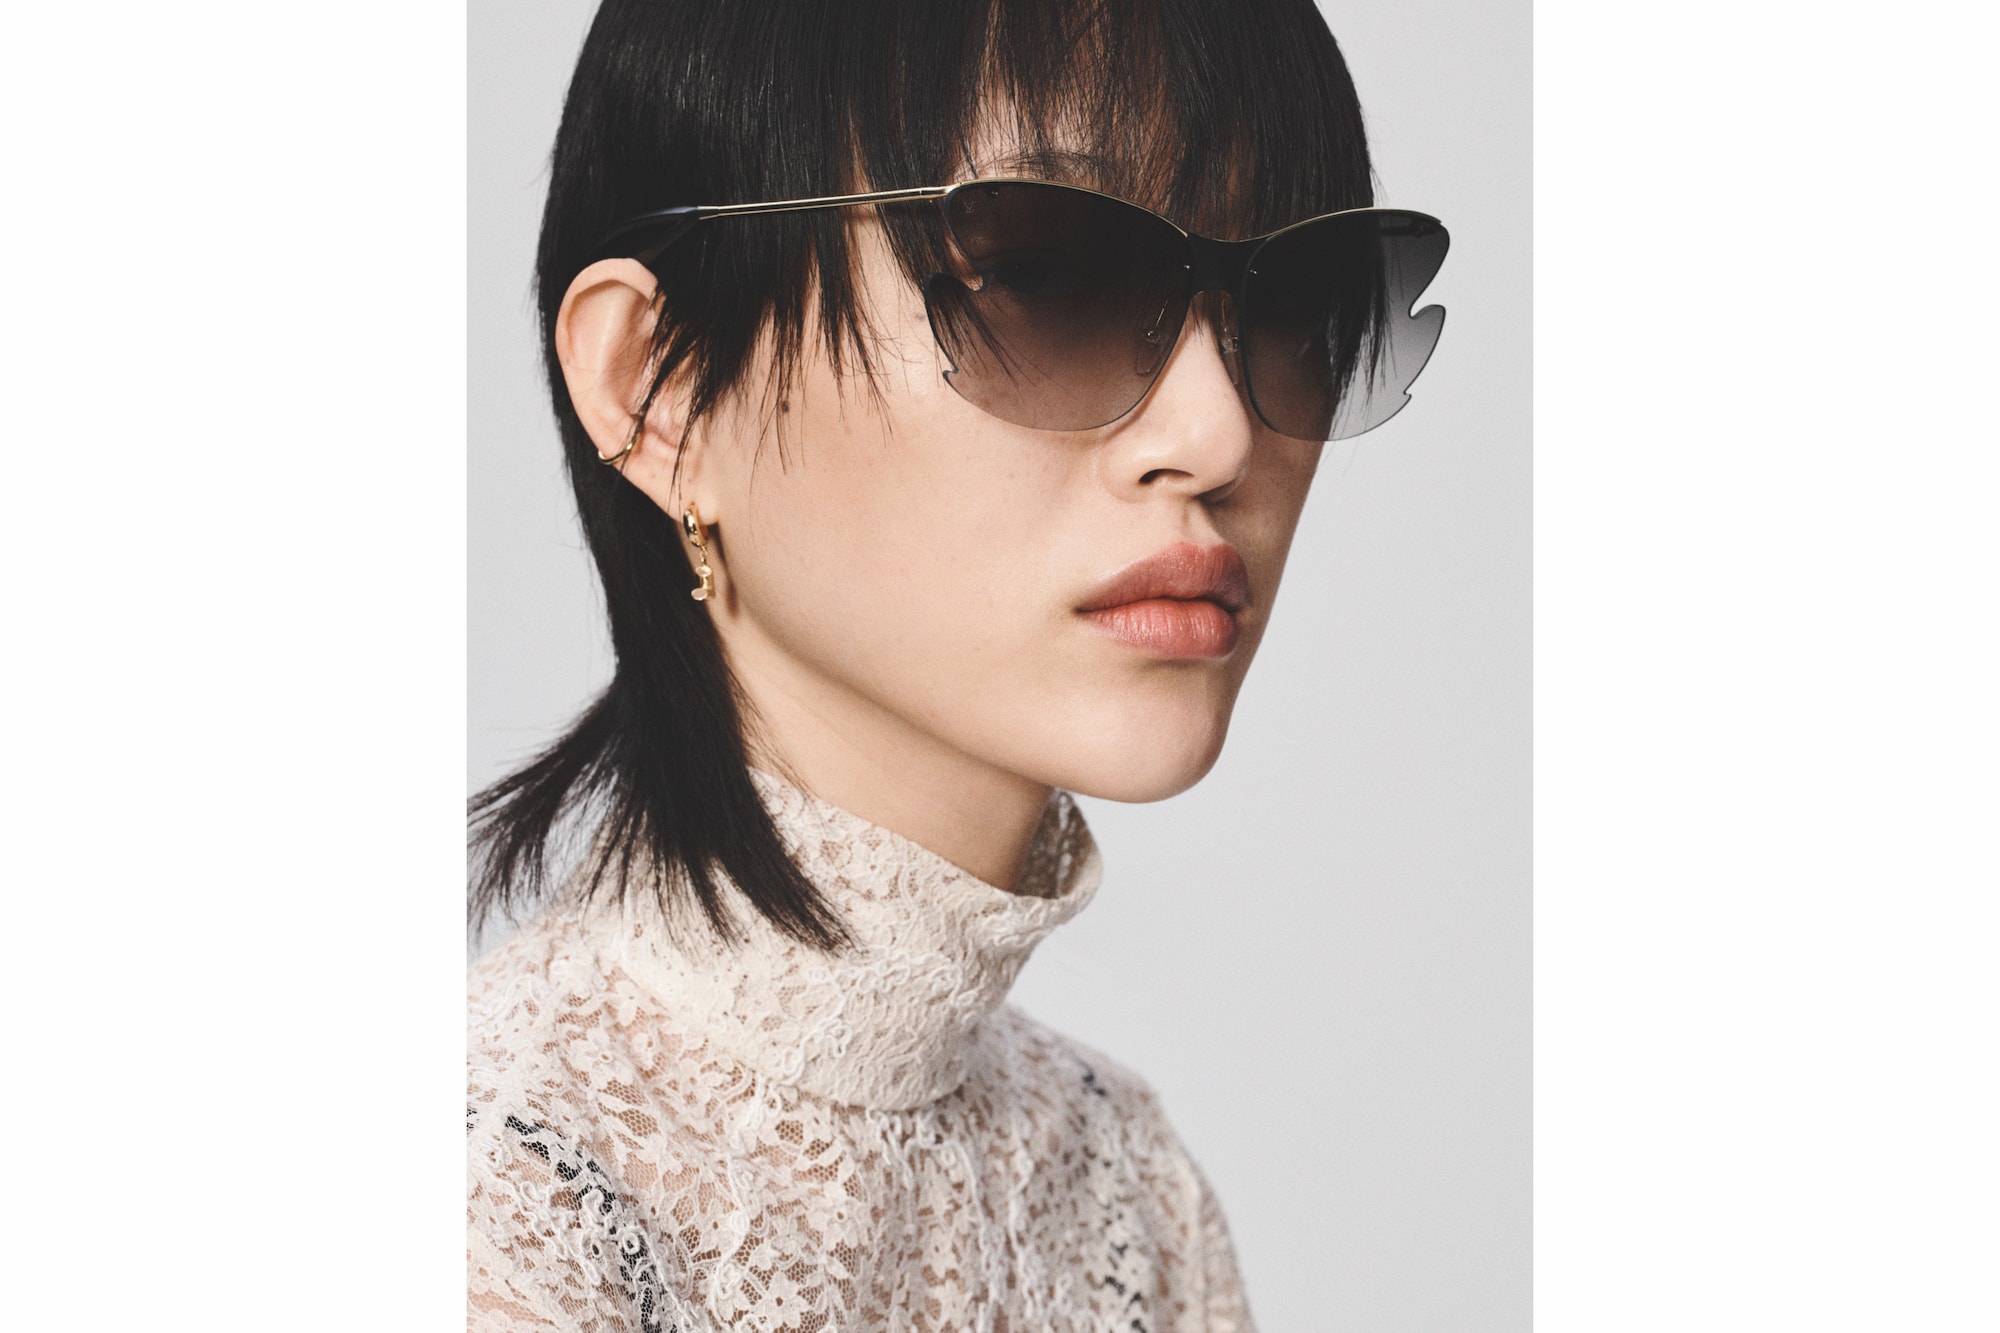 Louis Vuitton Accessories Jewelry Collection Fall Winter 2019 Bracelet Belt Sunglasses Phone Holder Earring 